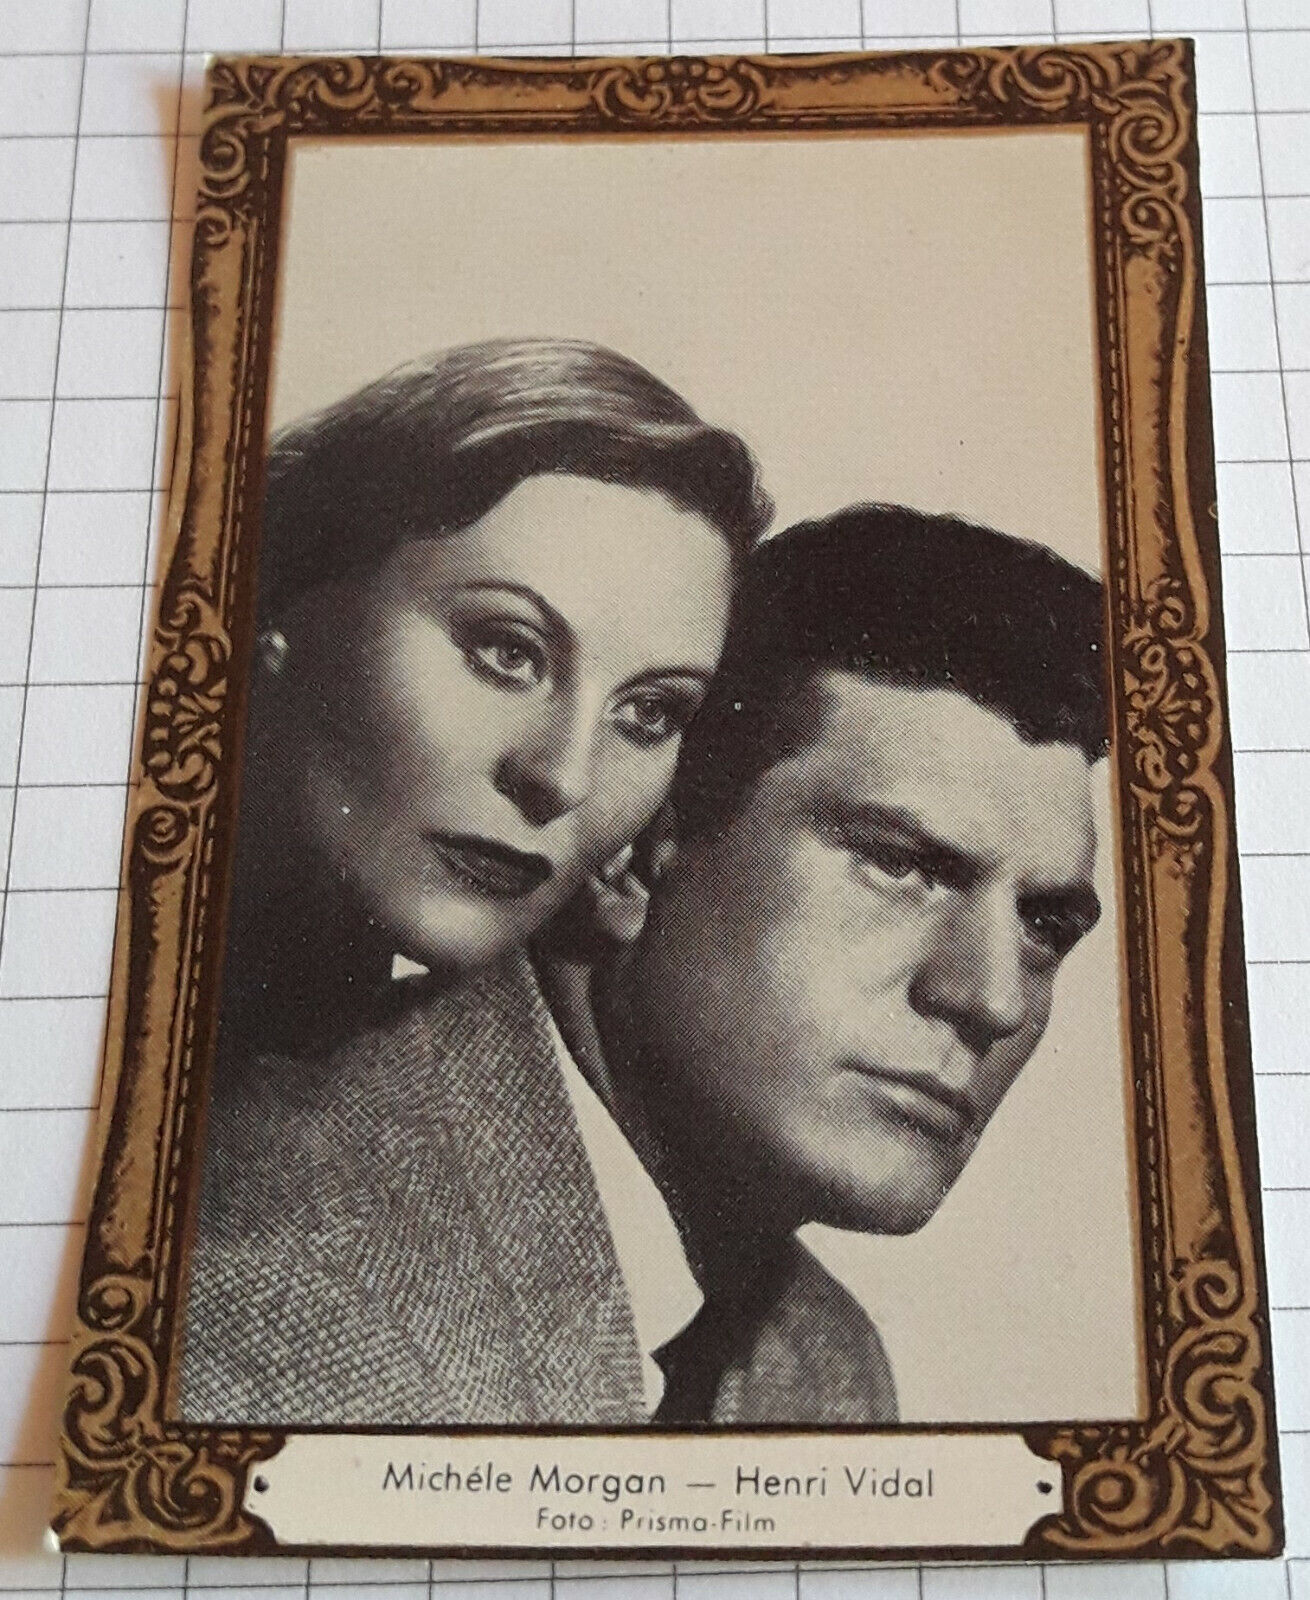 MICHELE MORGAN & HENRI VIDAL >> Portrait-Foto - Sammelbild / Trading Card #2784